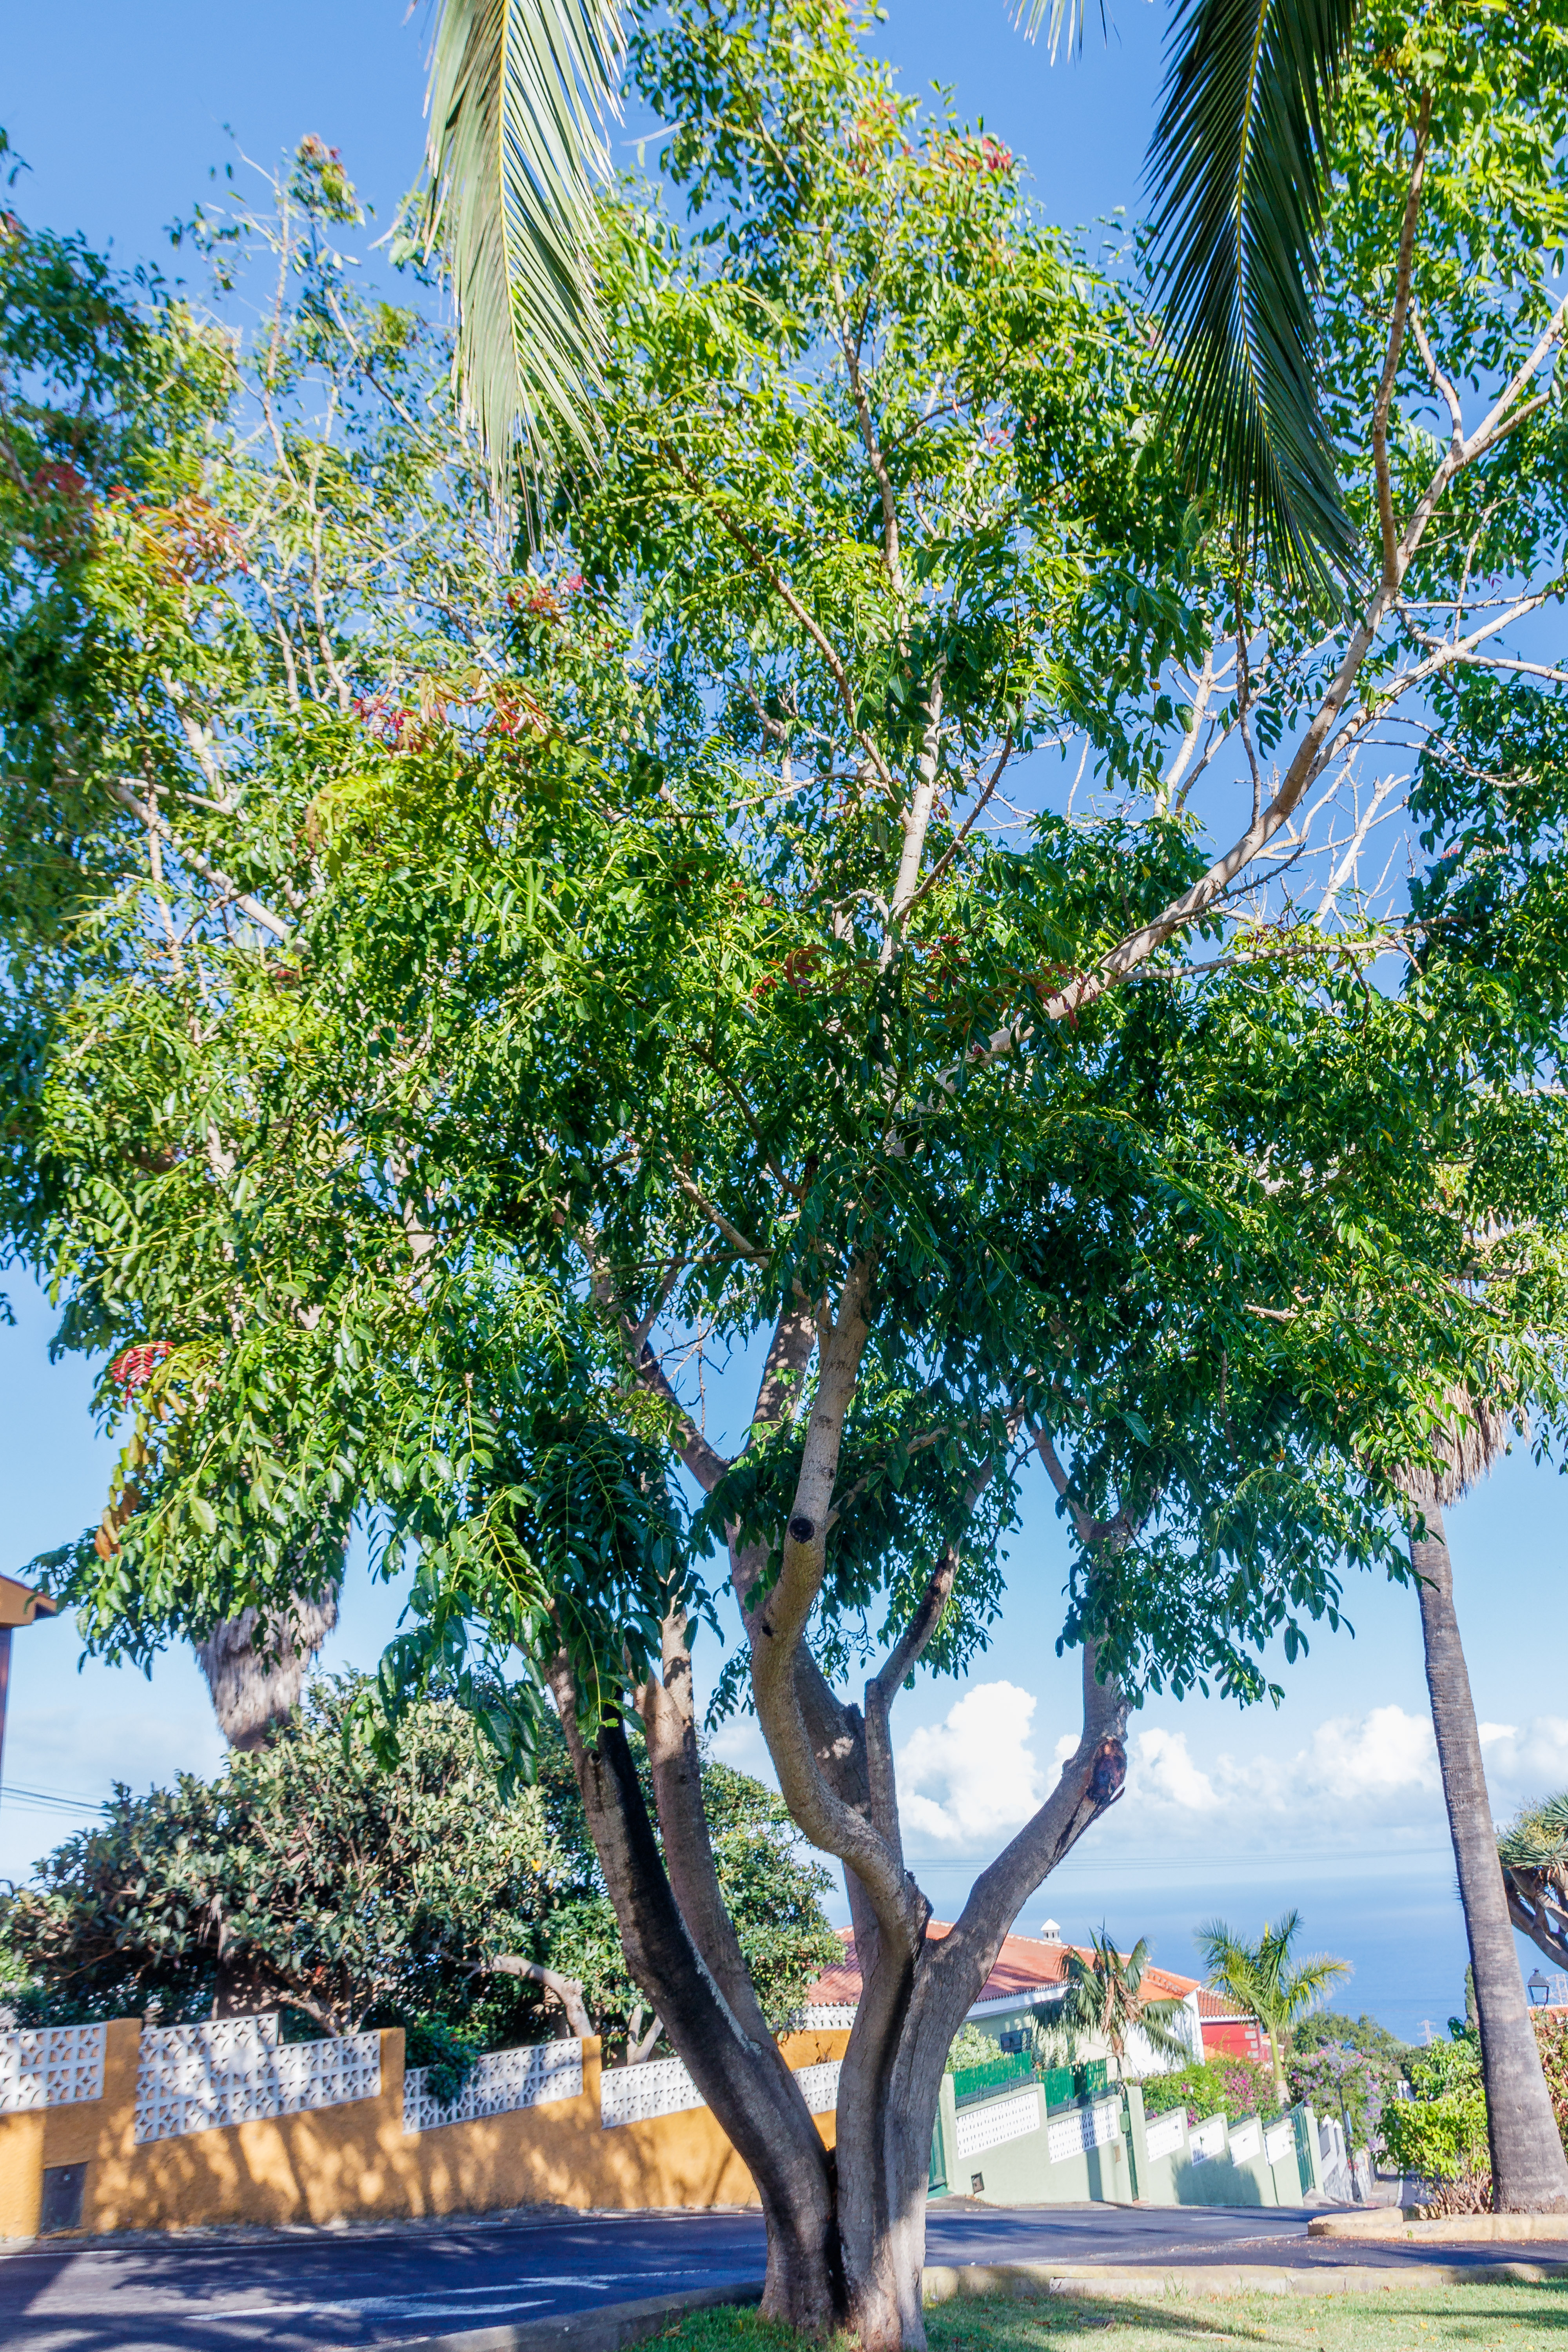  MG 9815 Acrocarpus fraxinifolius árbol mundani